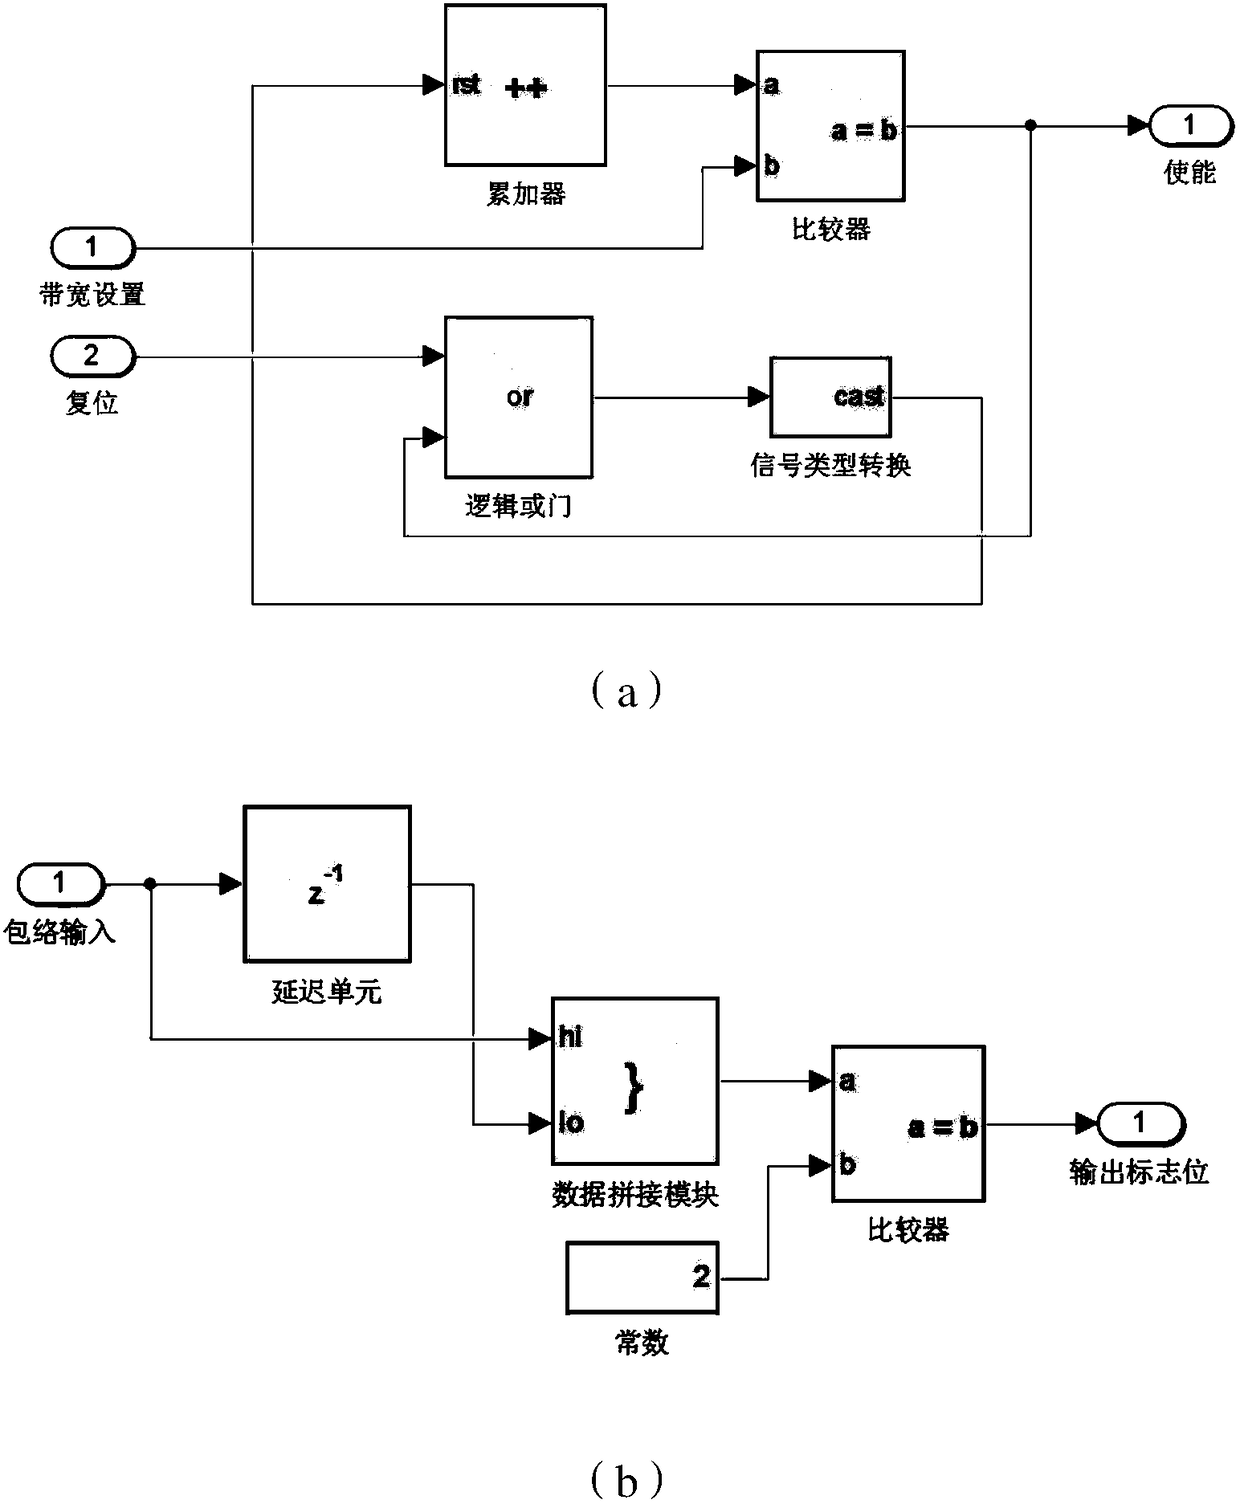 Method for generating radar digital interference based on System Generator